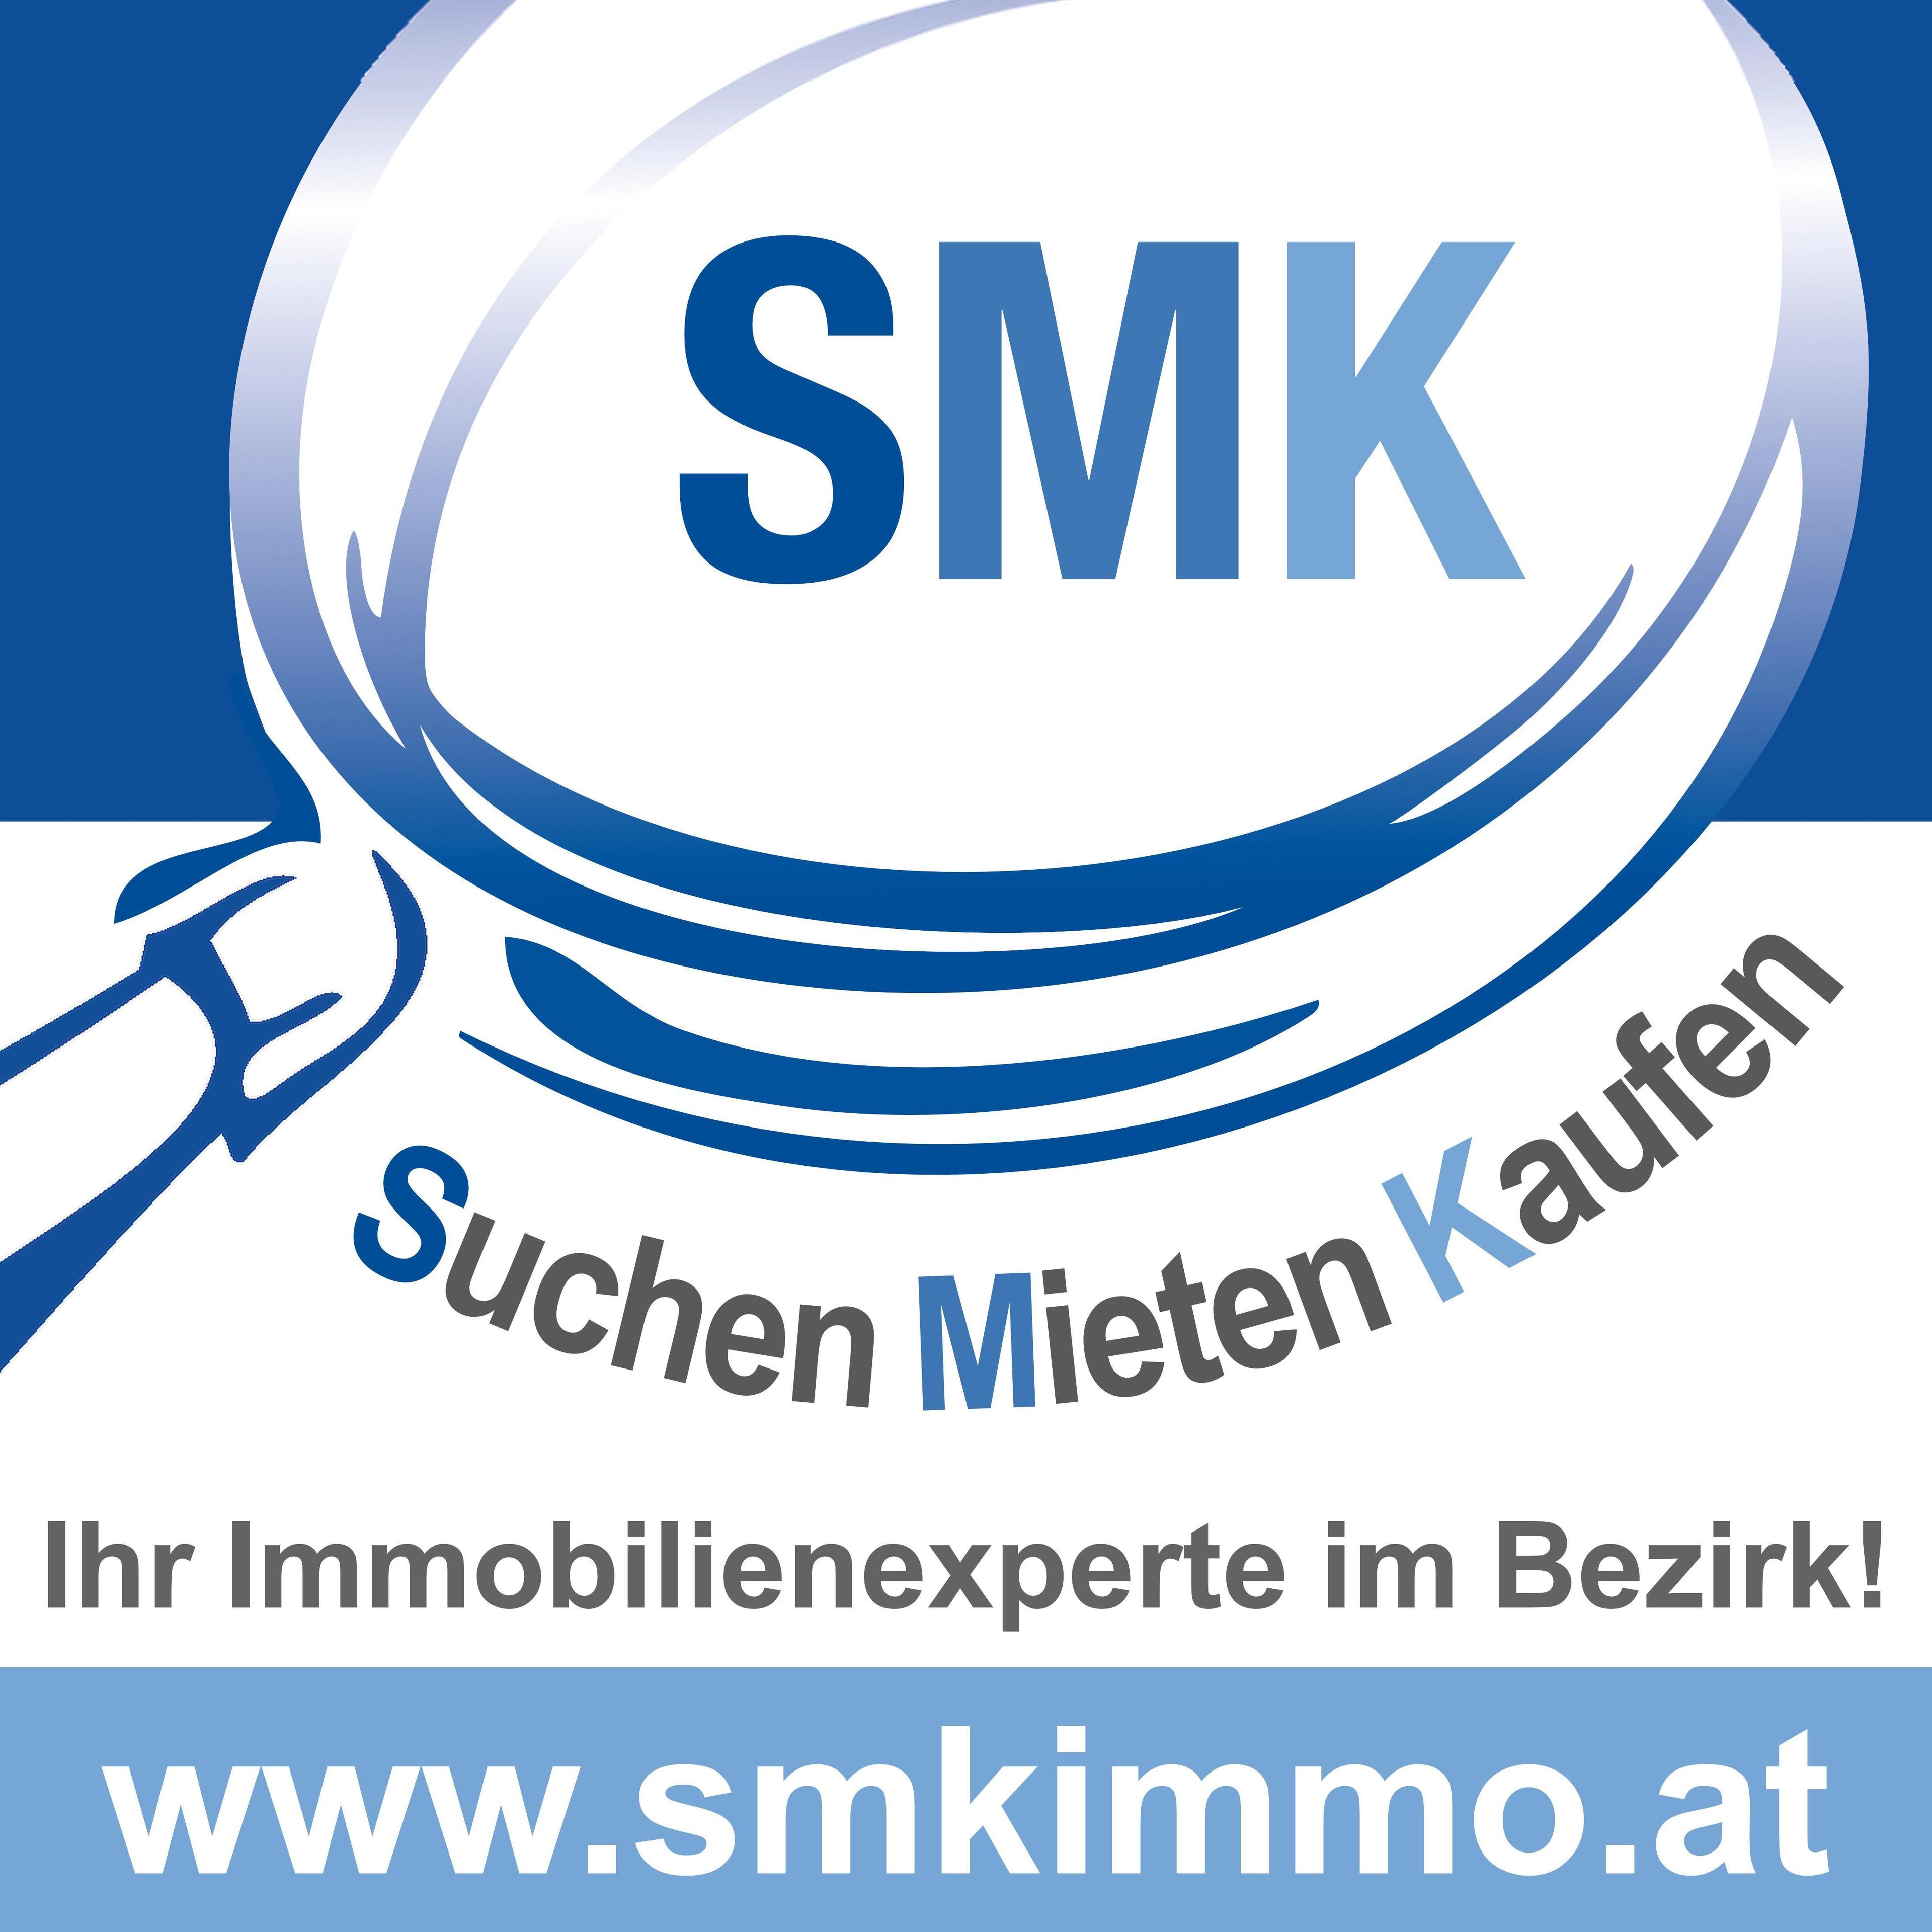 Logo SMK Immo Treuhand GmbH Büro Waidhofen/Thaya